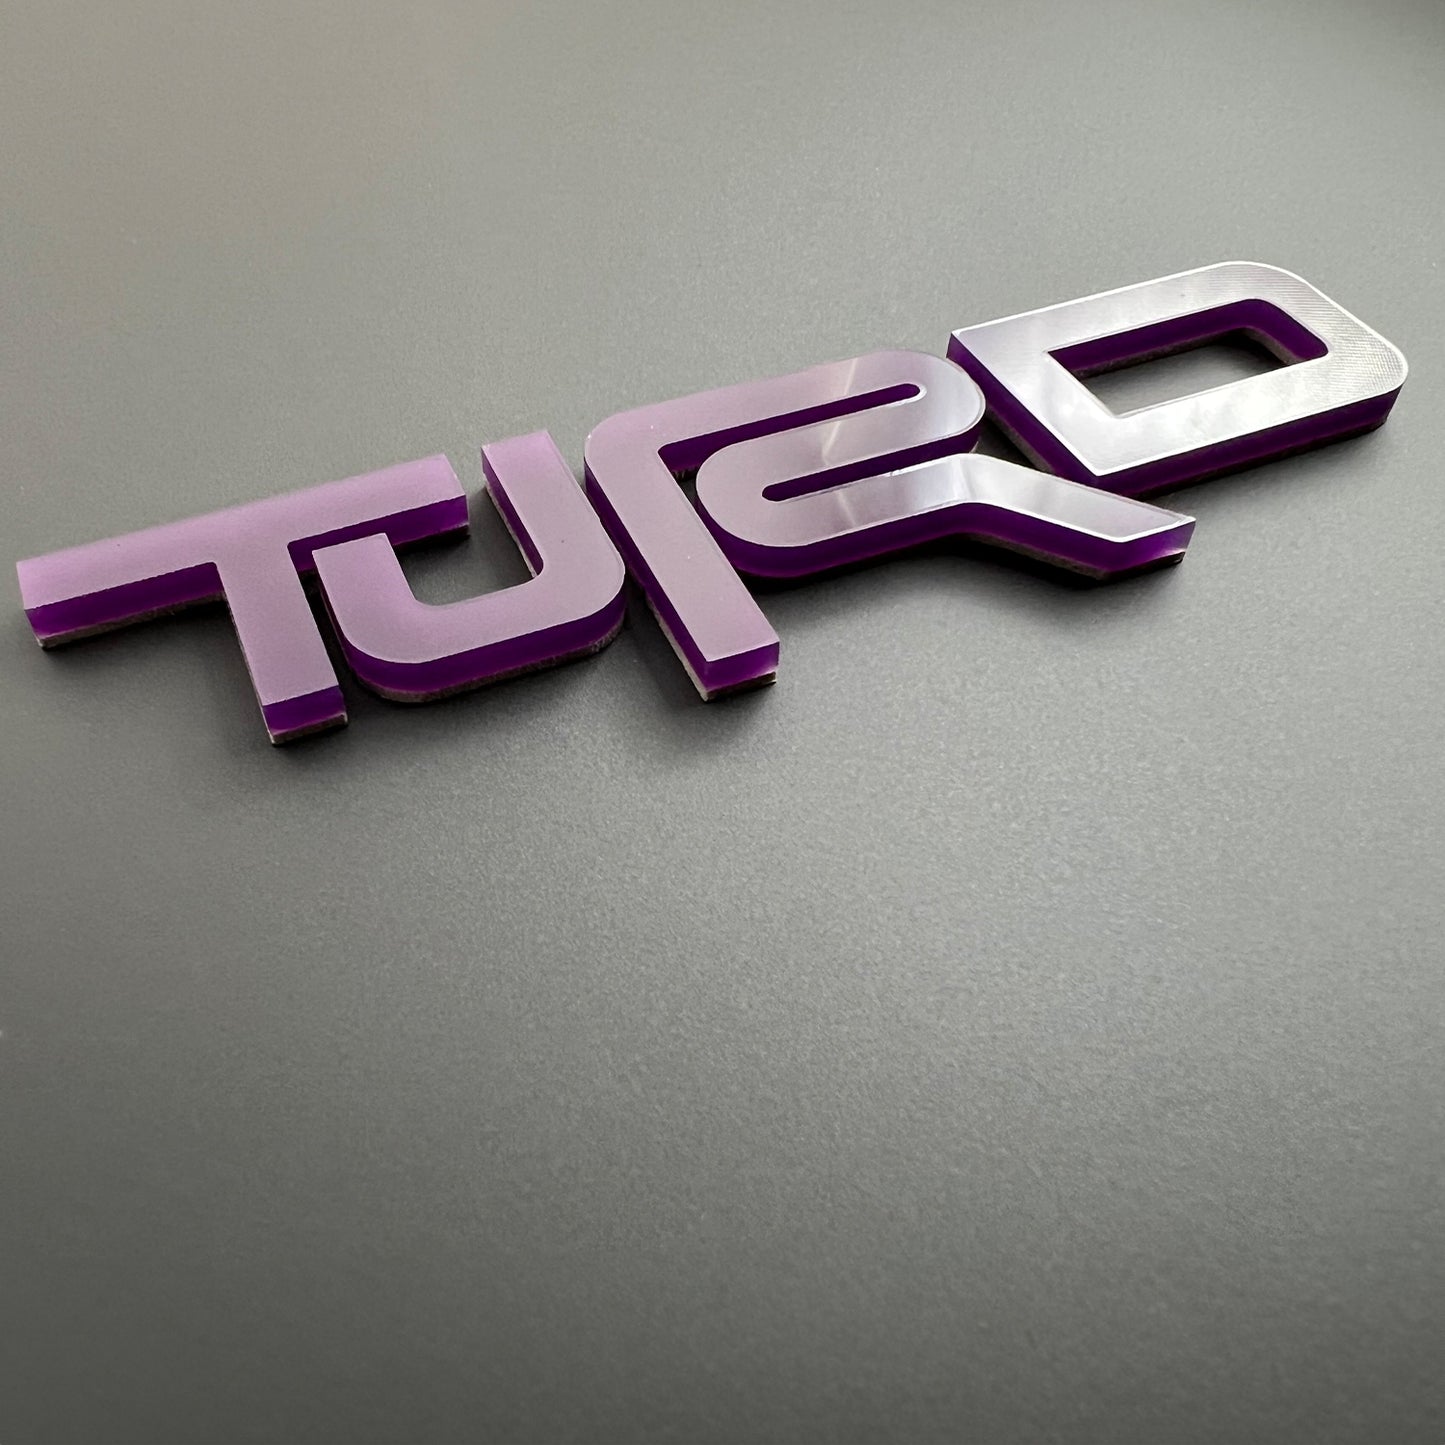 ONE (1) TURD Car Truck Emblem Badge Fits Toyota FJ Tacoma 4runner Tundra 40 Land Cruiser Camry